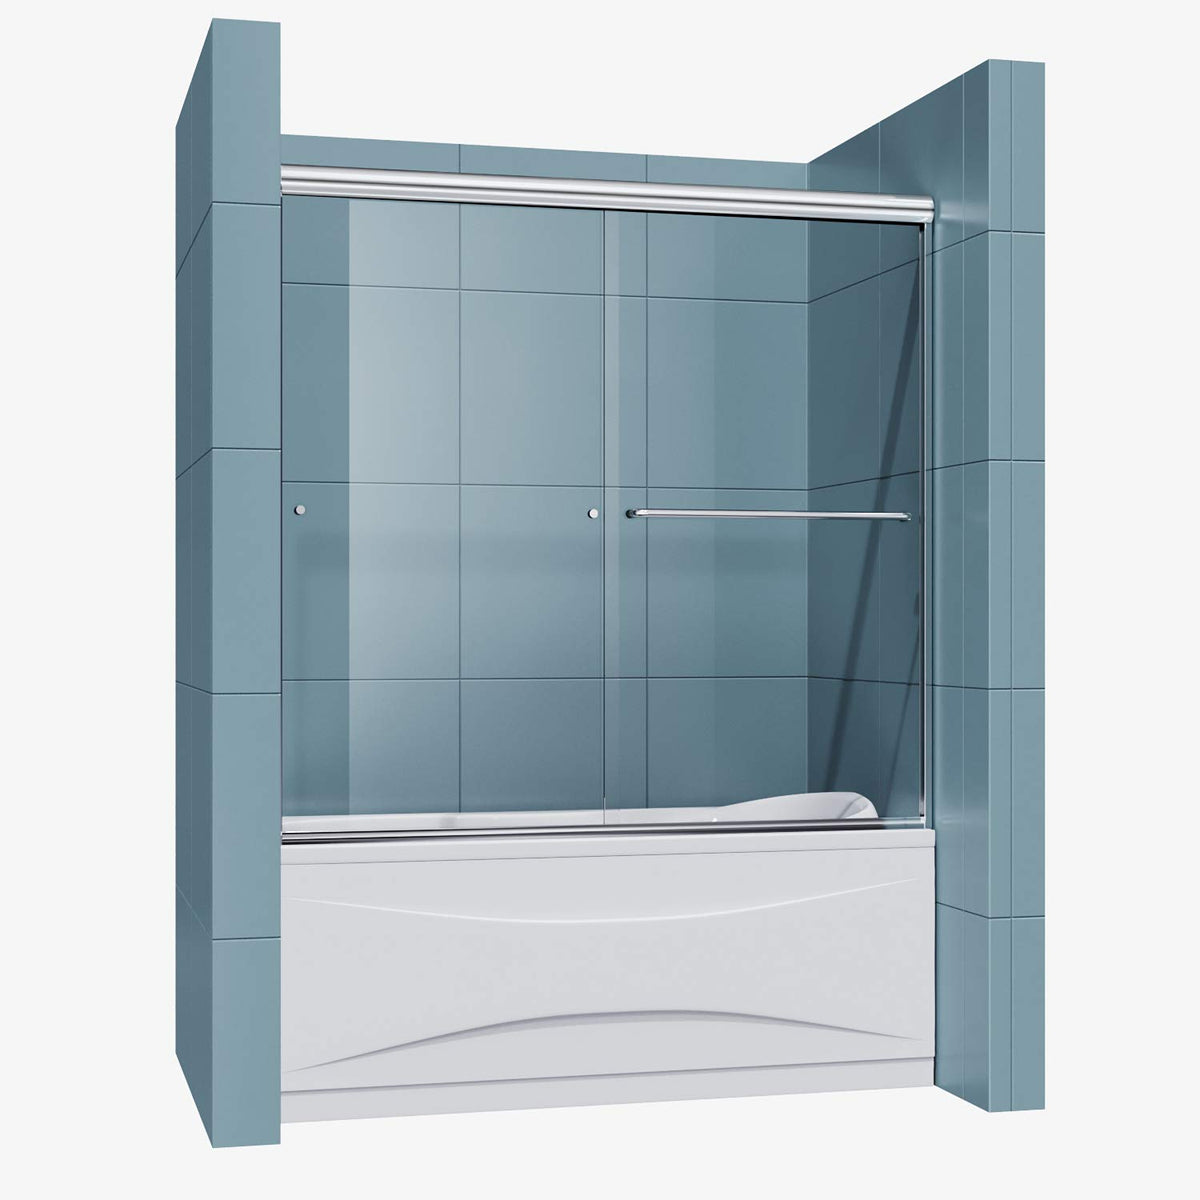 SUNNY SHOWER 60 in. W x 57.4 in. H Chrome Finish Bathtub Double Sliding Doors